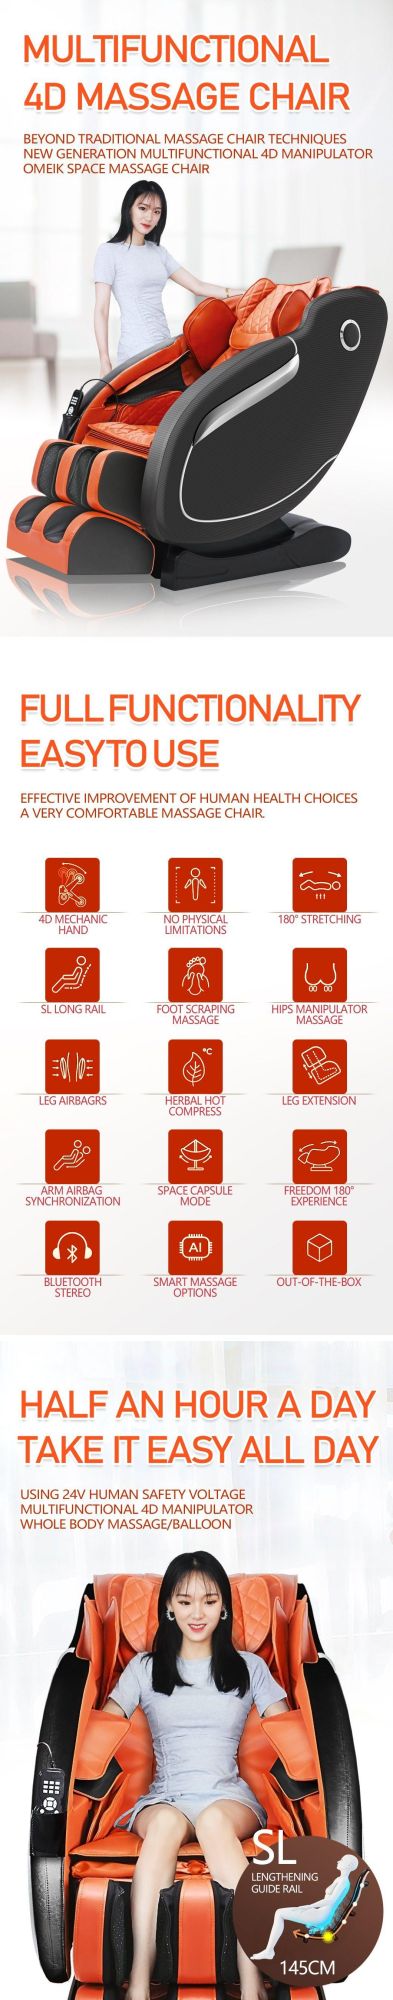 Electric Full Body Space Capsule Massage Chair 4D Zero Gravity Salon Massage Chair